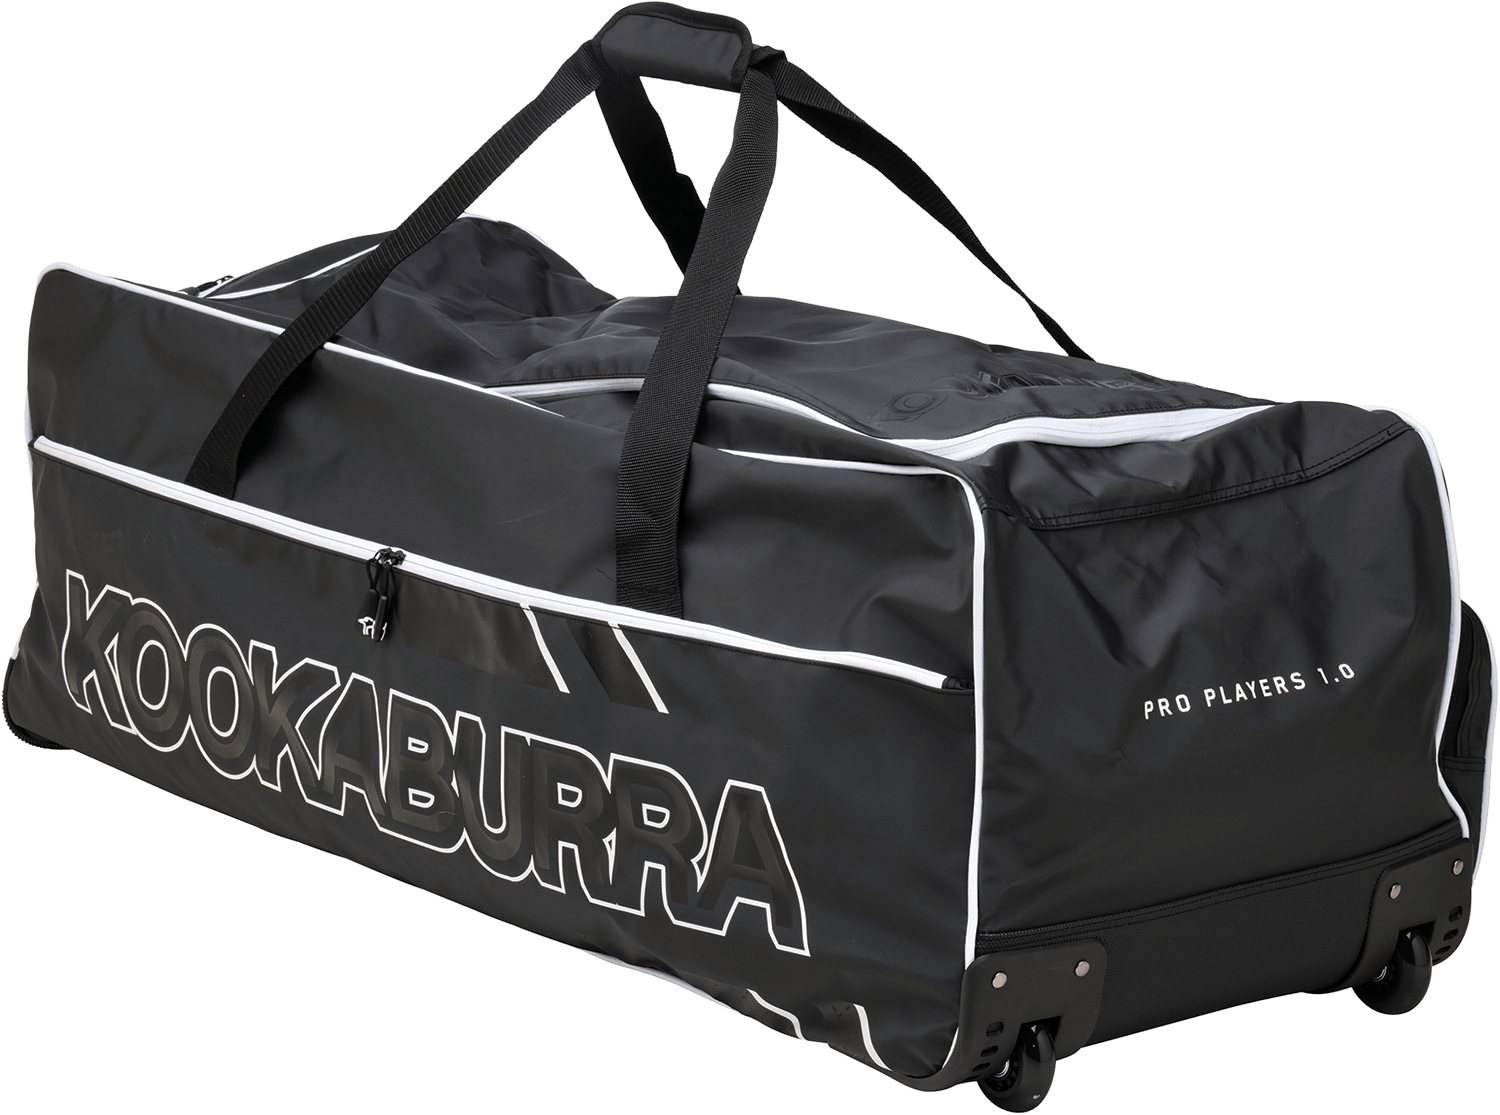 Kookaburra Cricket Bags Kookaburra Pro Players 1.0 Wheelie Cricket Kit Bag